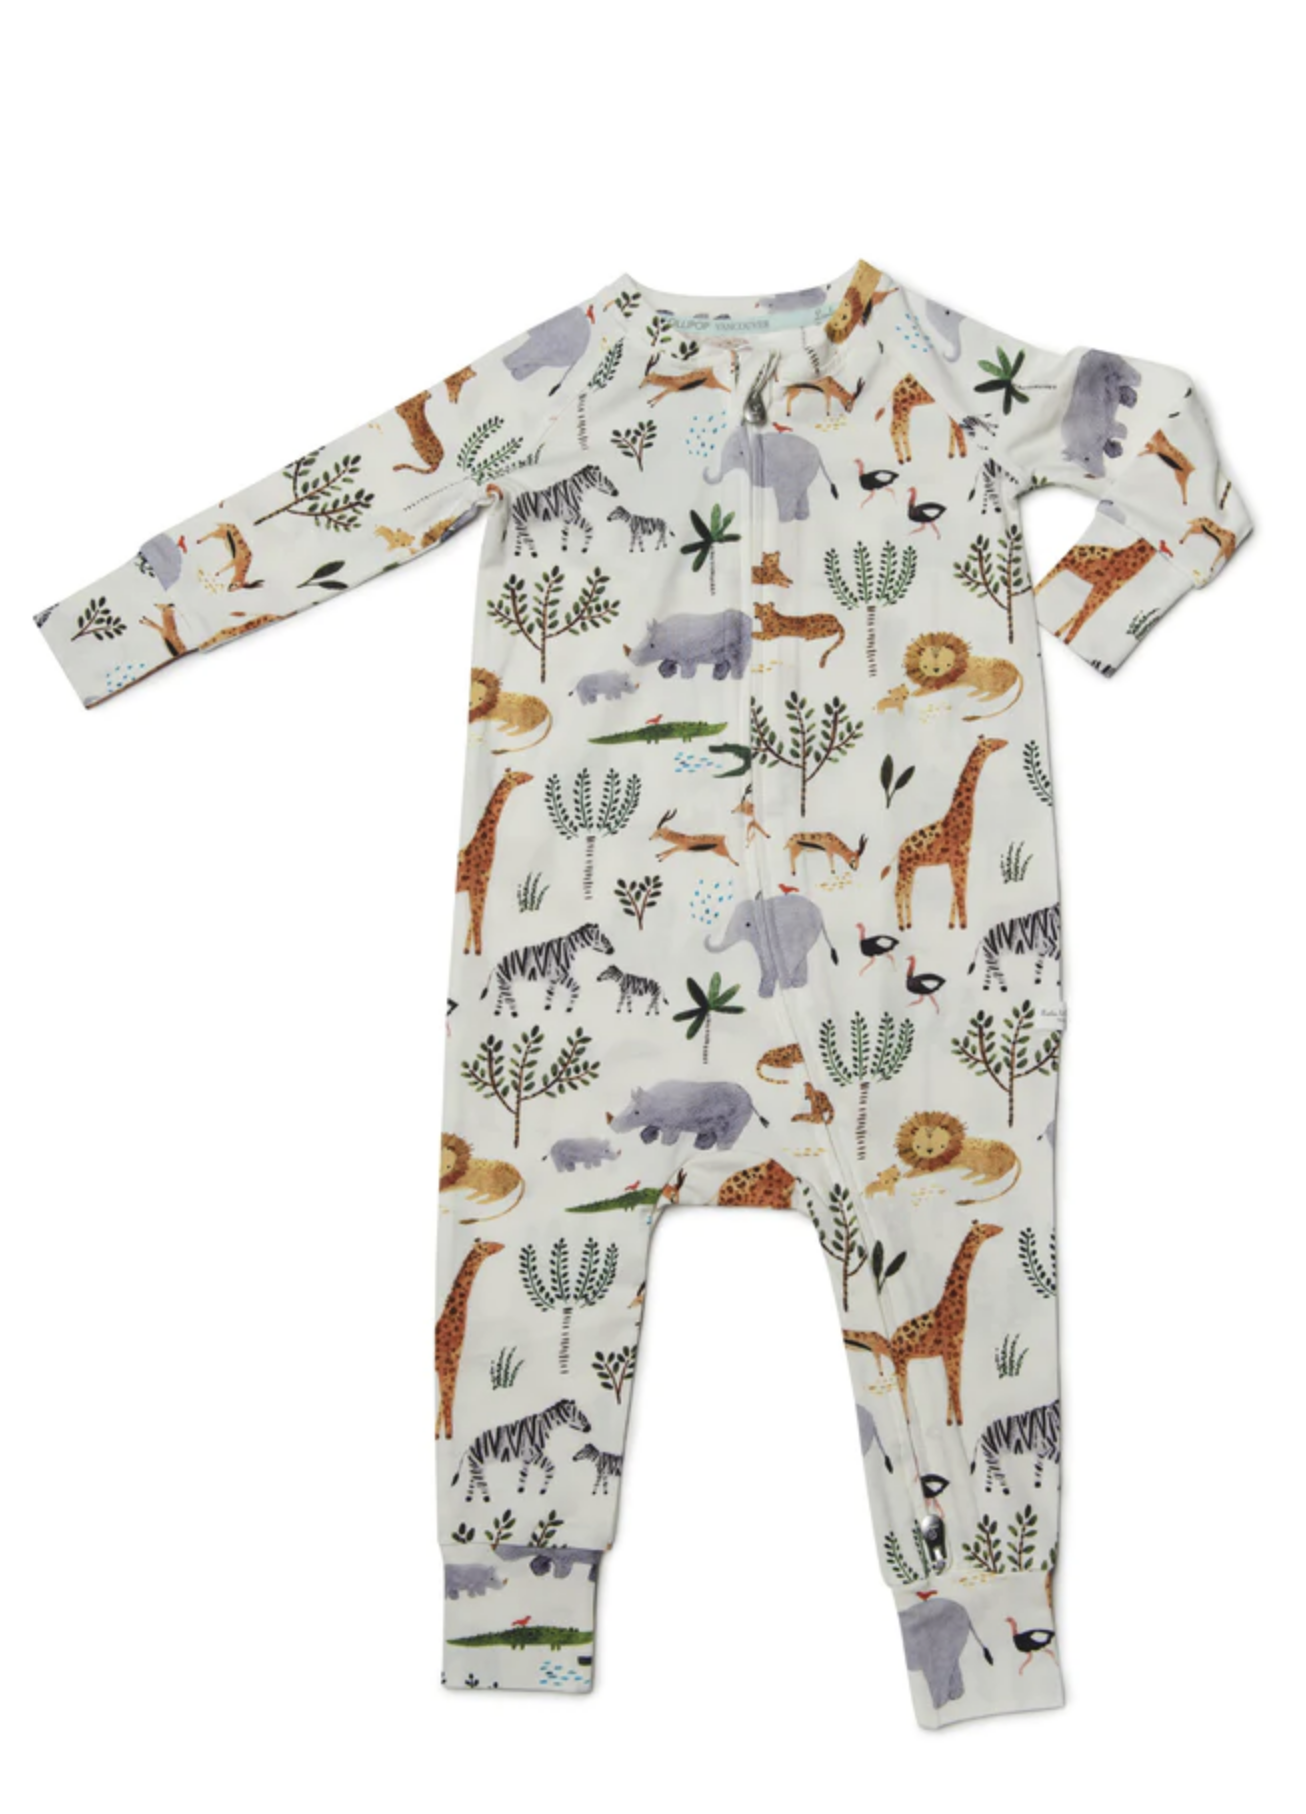 Best Baby Clothing Brands Loulou Lollipop Top Sleeper in Tencel Safari Jungle Theme